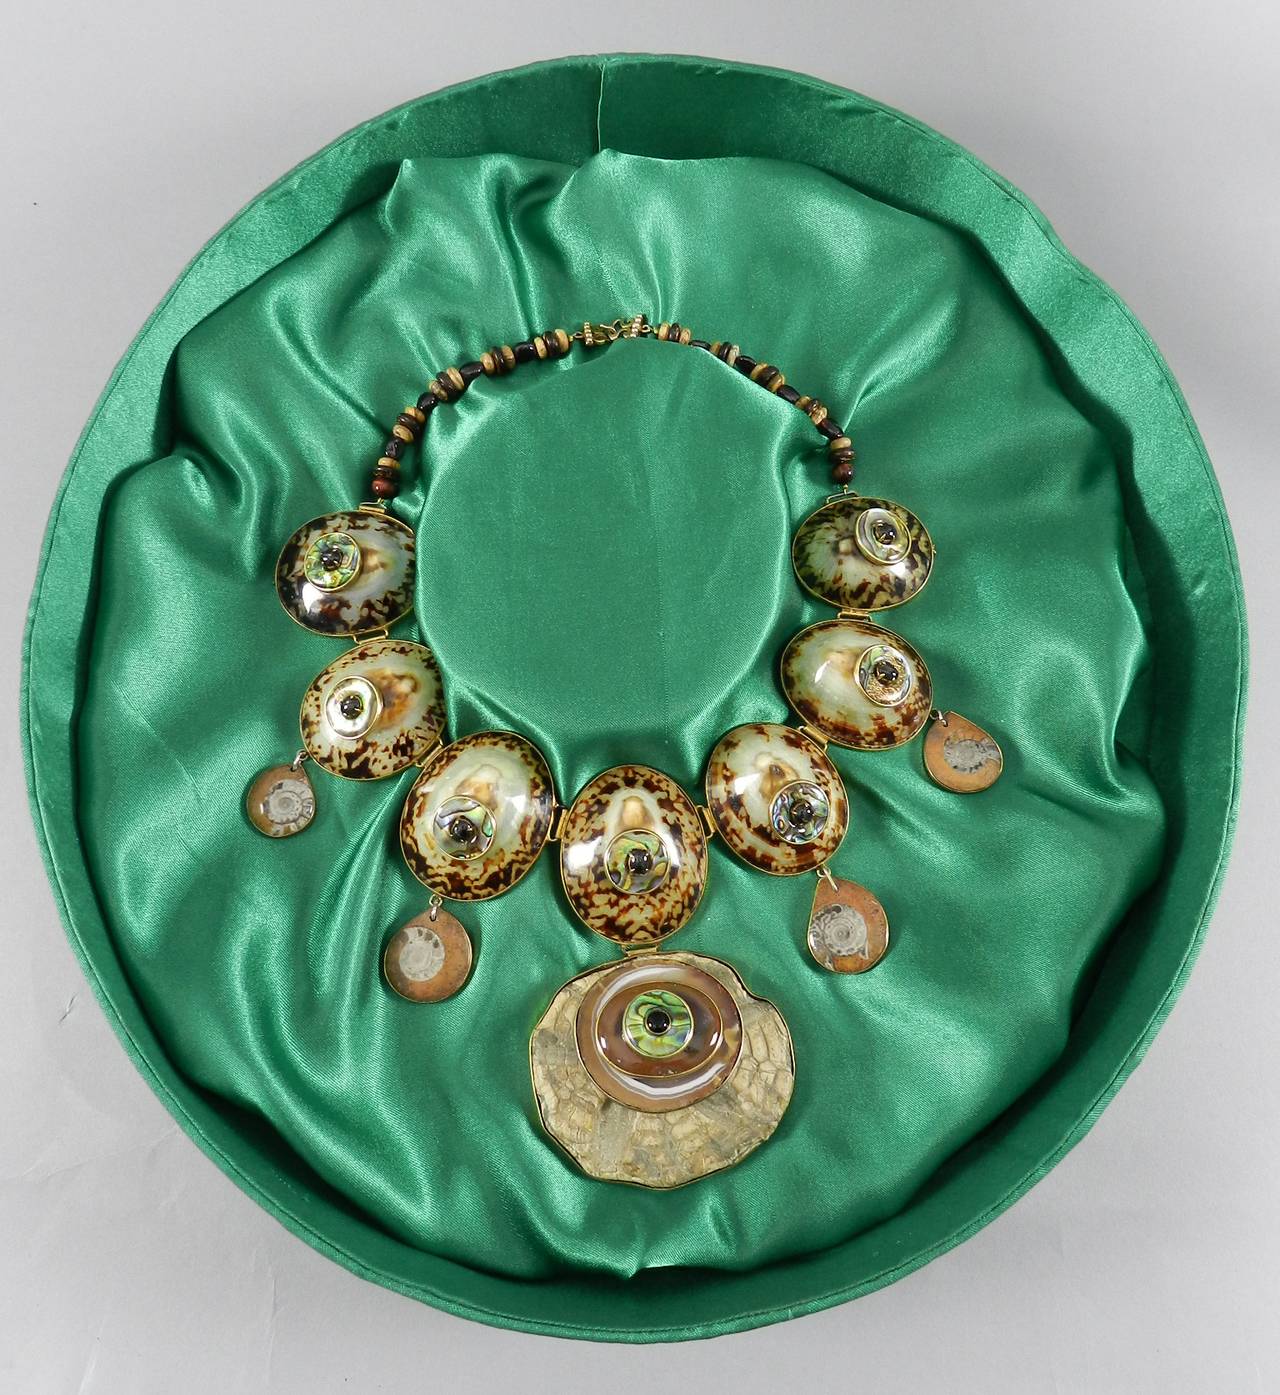 Tony Duquette 1999 Talisman Bib Necklace in Box - Ammonite and Shells 4